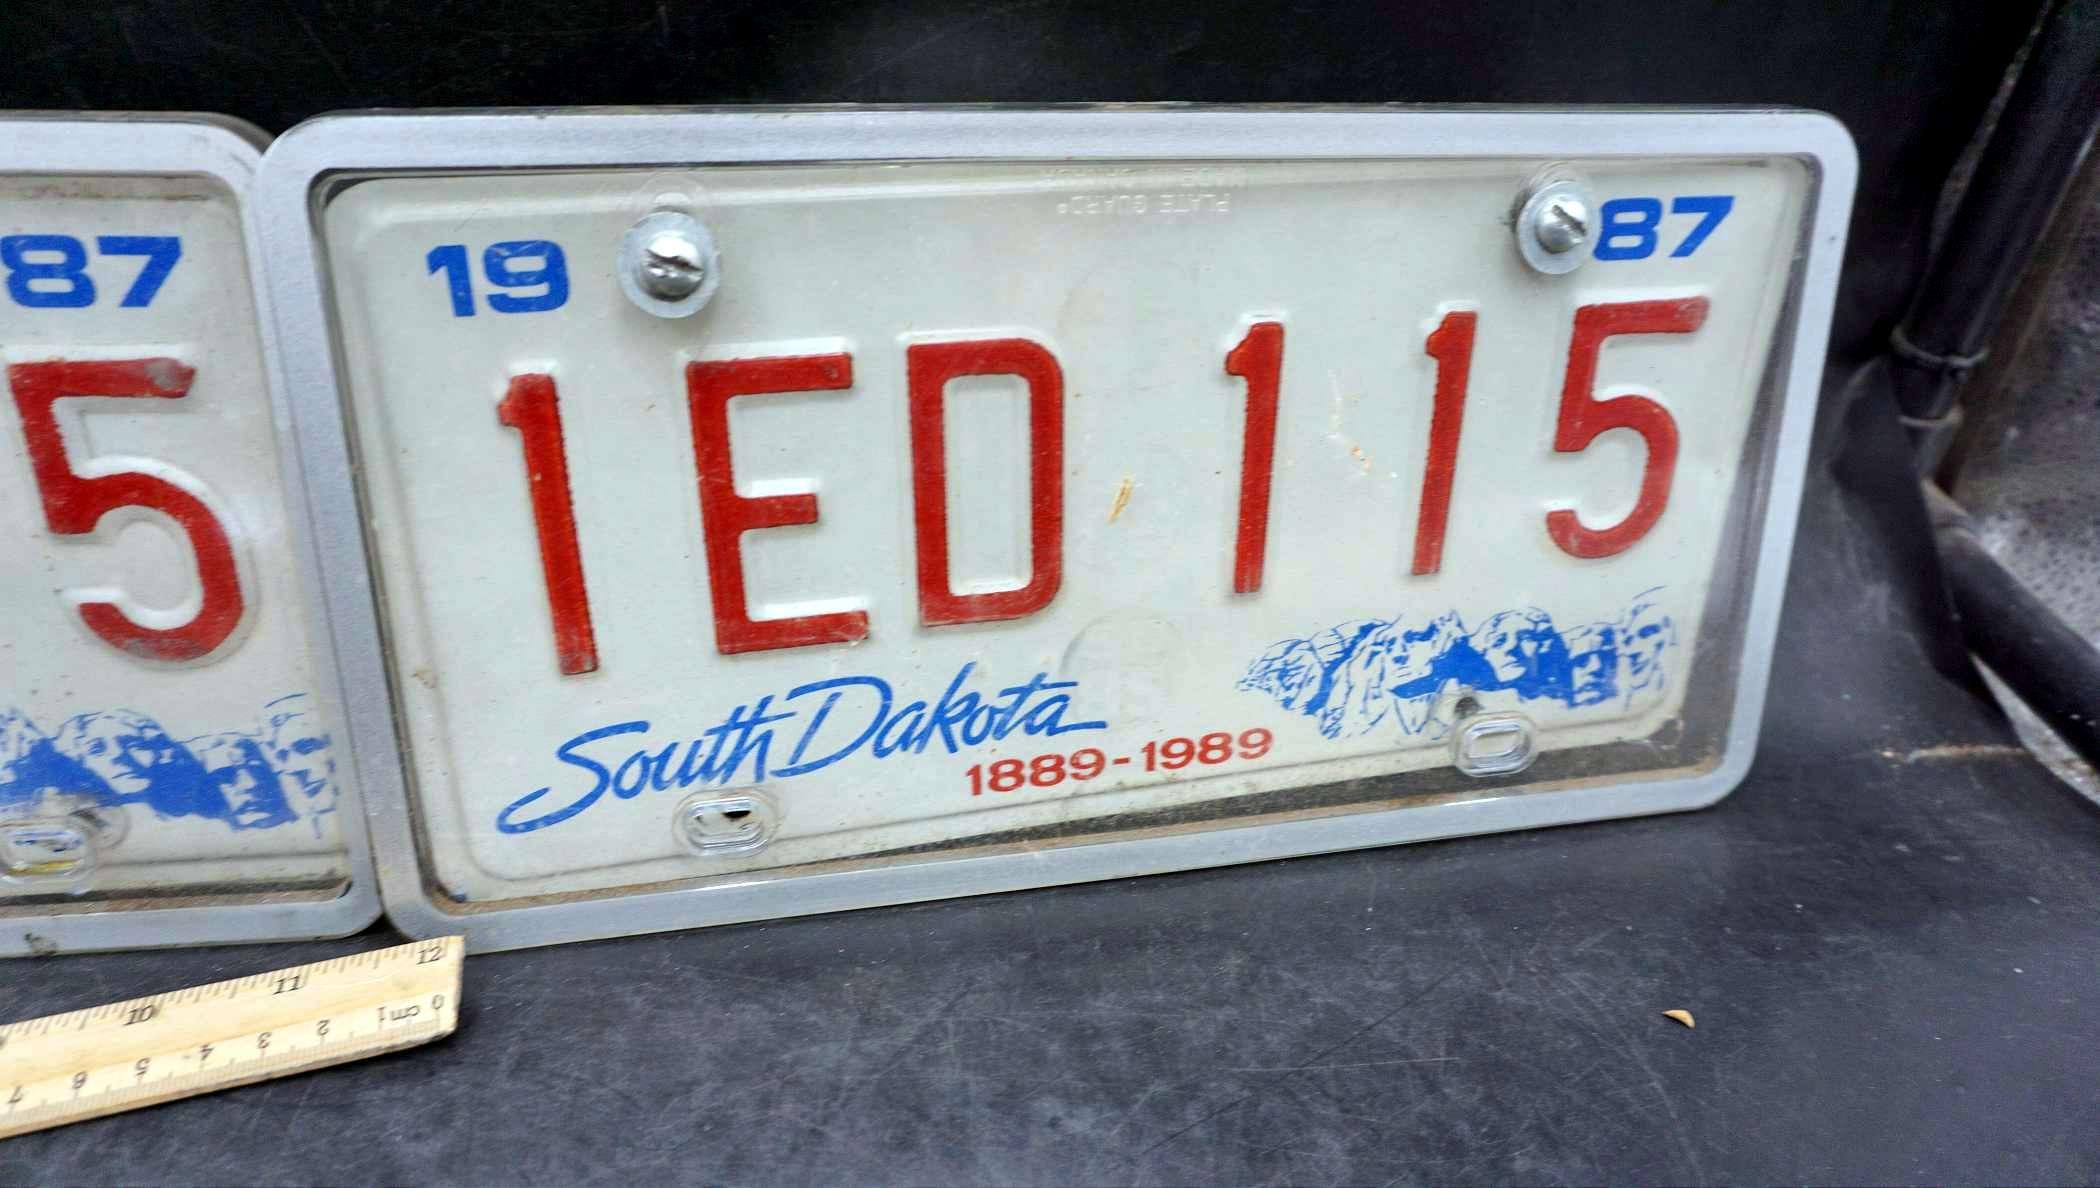 2 - Matching Set Of 1987 South Dakota License Plates